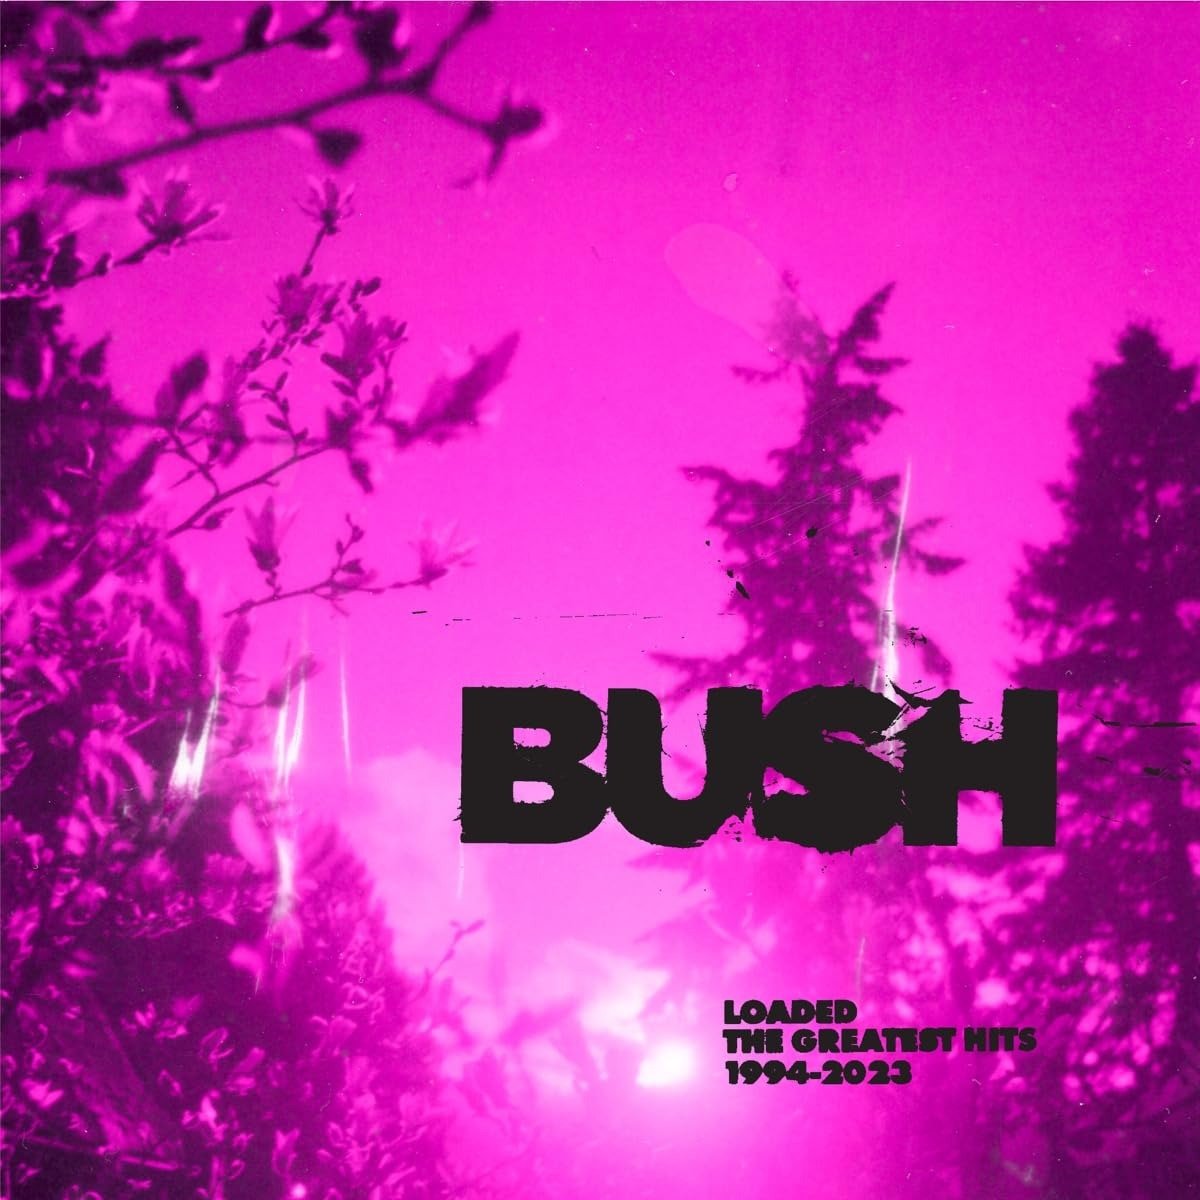 CD Shop - BUSH Loaded: The Greatest Hits 1994-2023